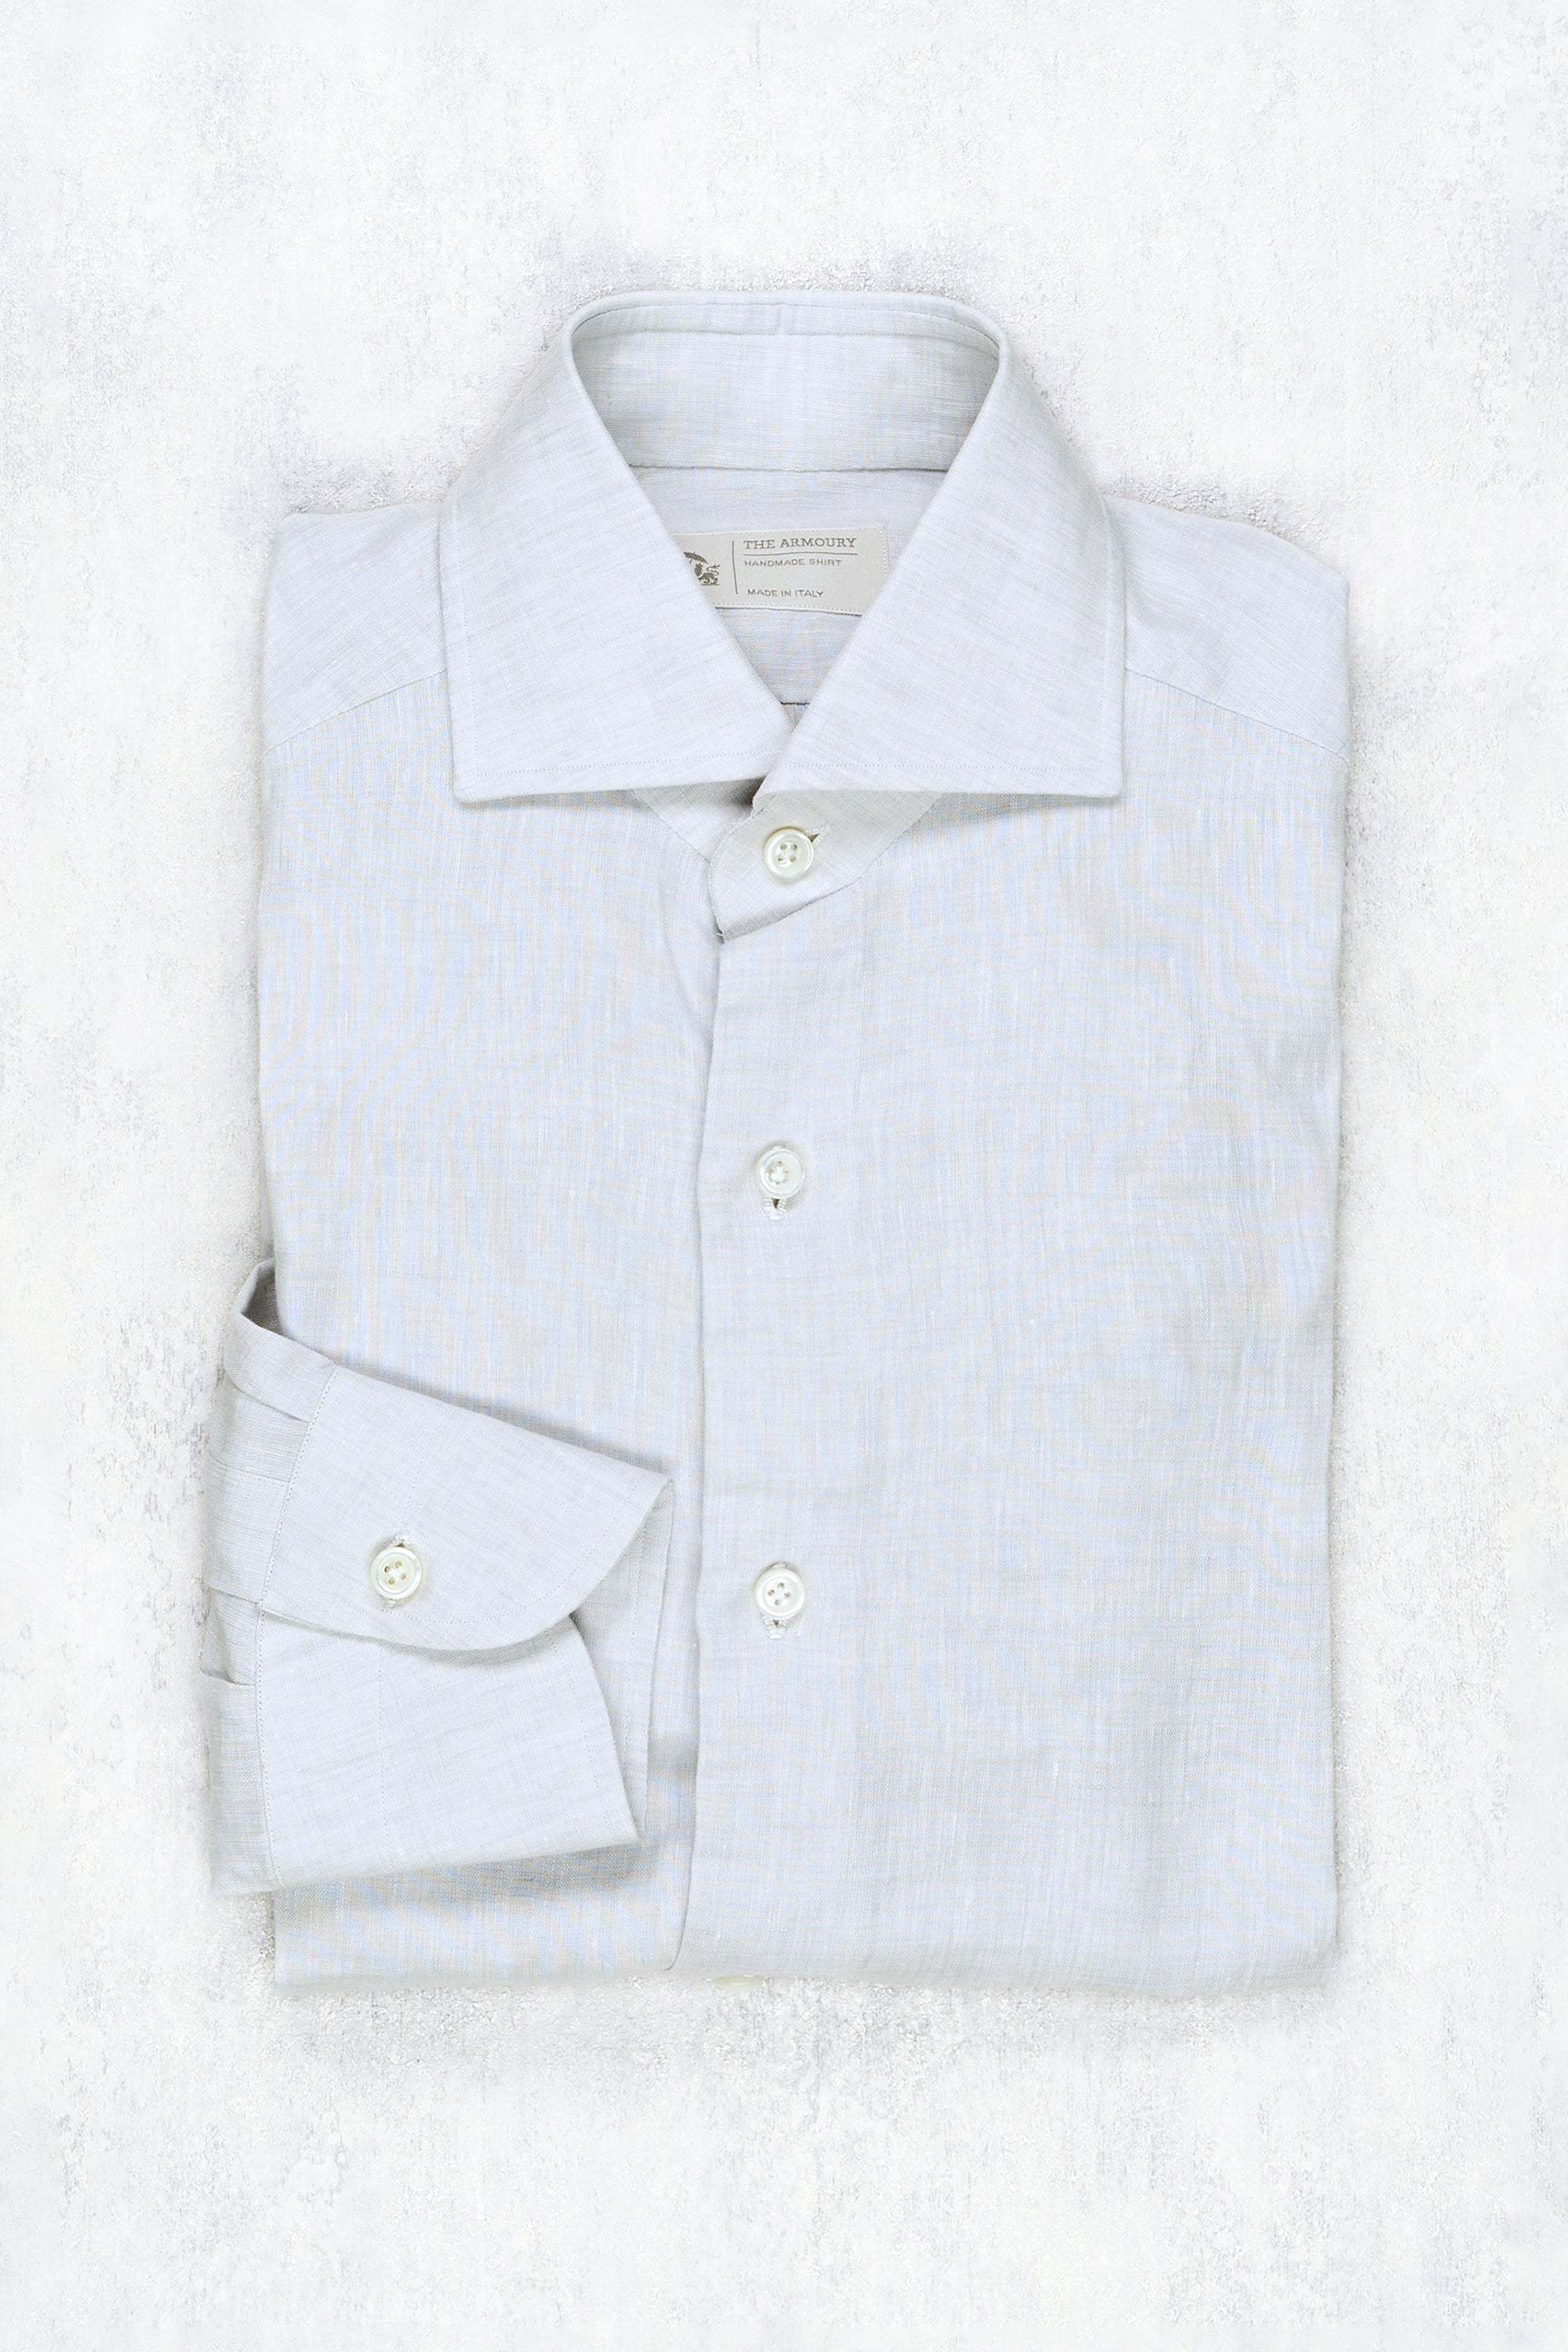 The Armoury Light Grey Linen Spread Collar Shirt MTM